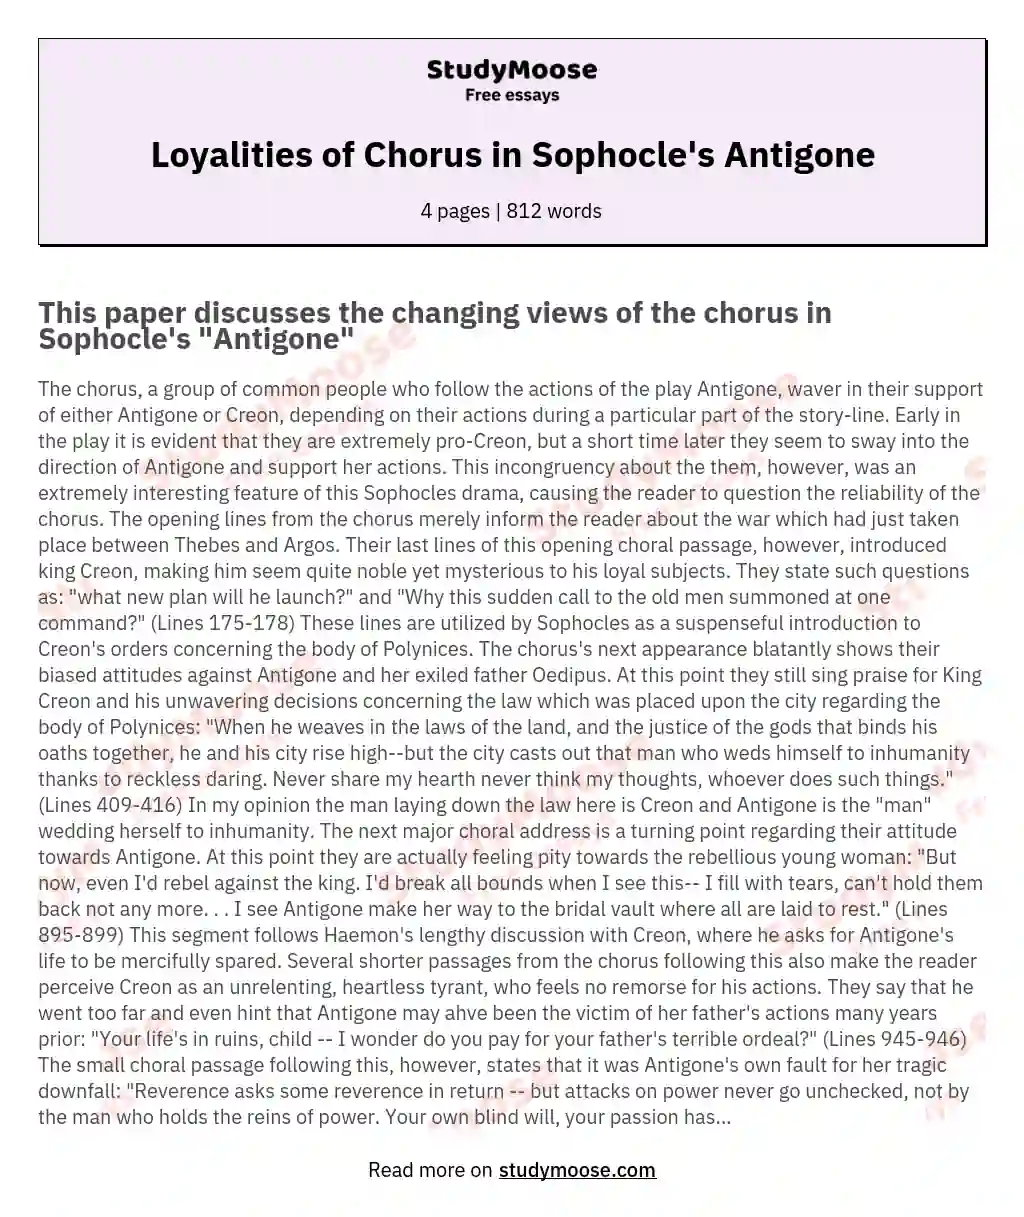 Loyalities of Chorus in Sophocle's Antigone essay